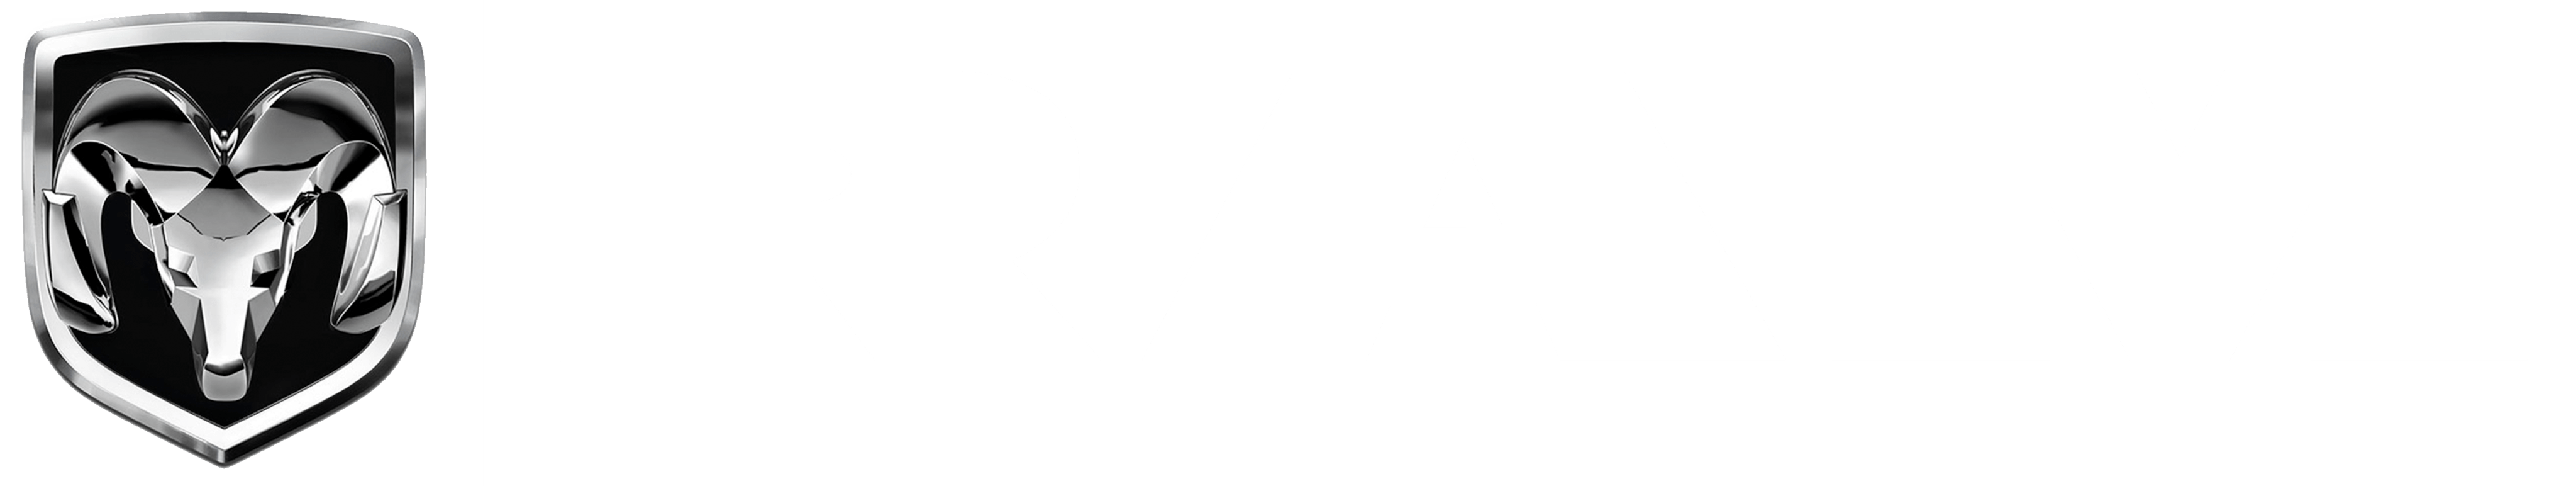 Ram Truck Logo - 2016 Ram 1500 | Pat McGrath Dodge Country